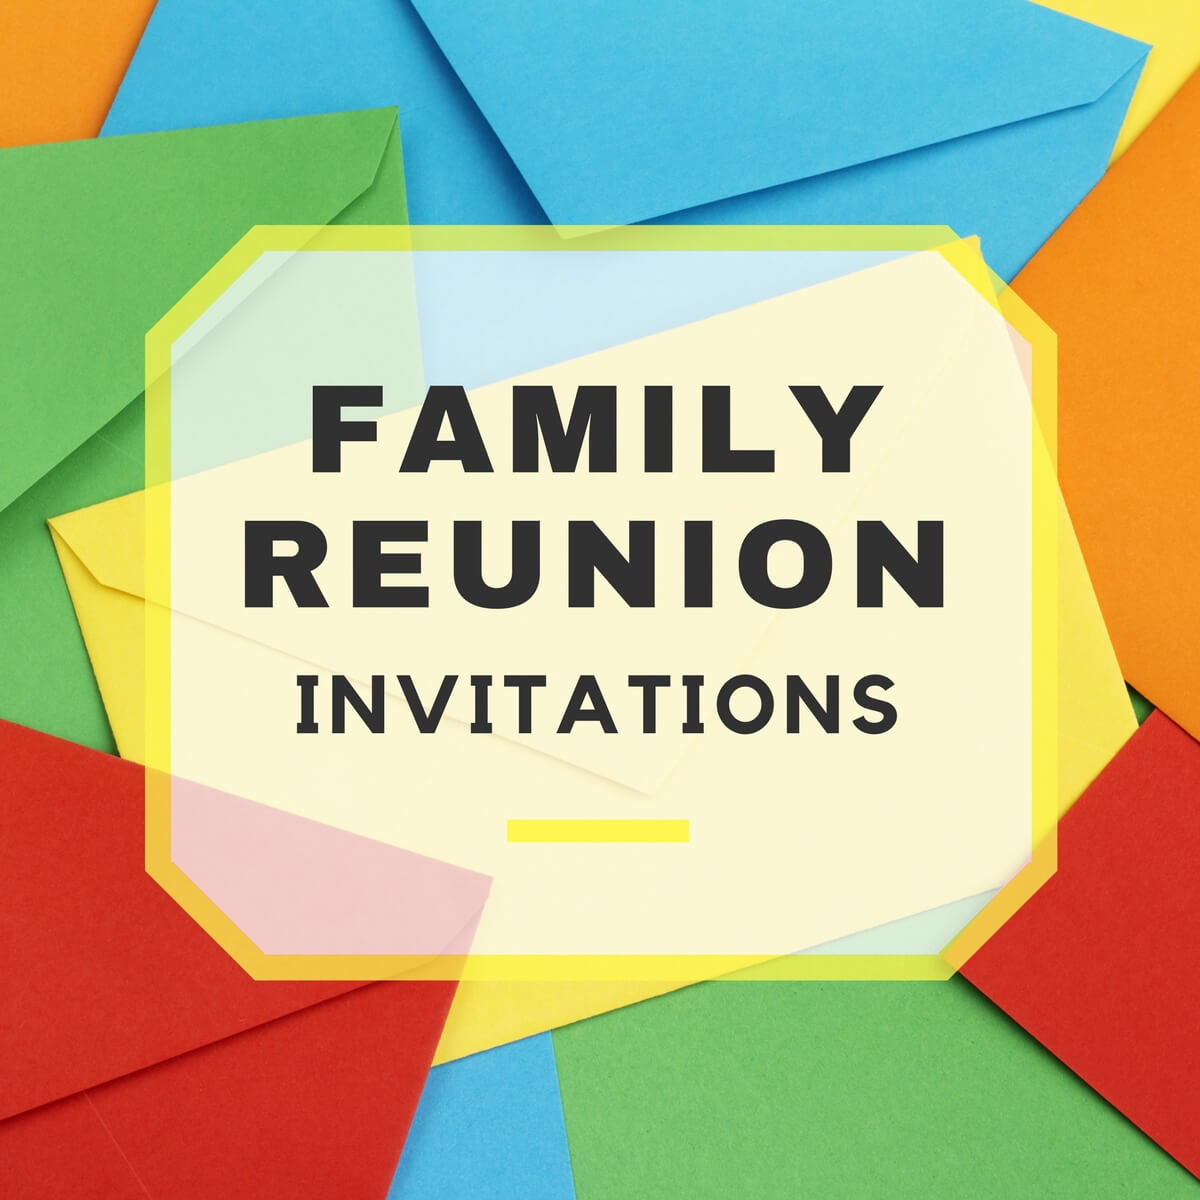 Family Reunion Invitations Regarding Reunion Invitation Card Templates